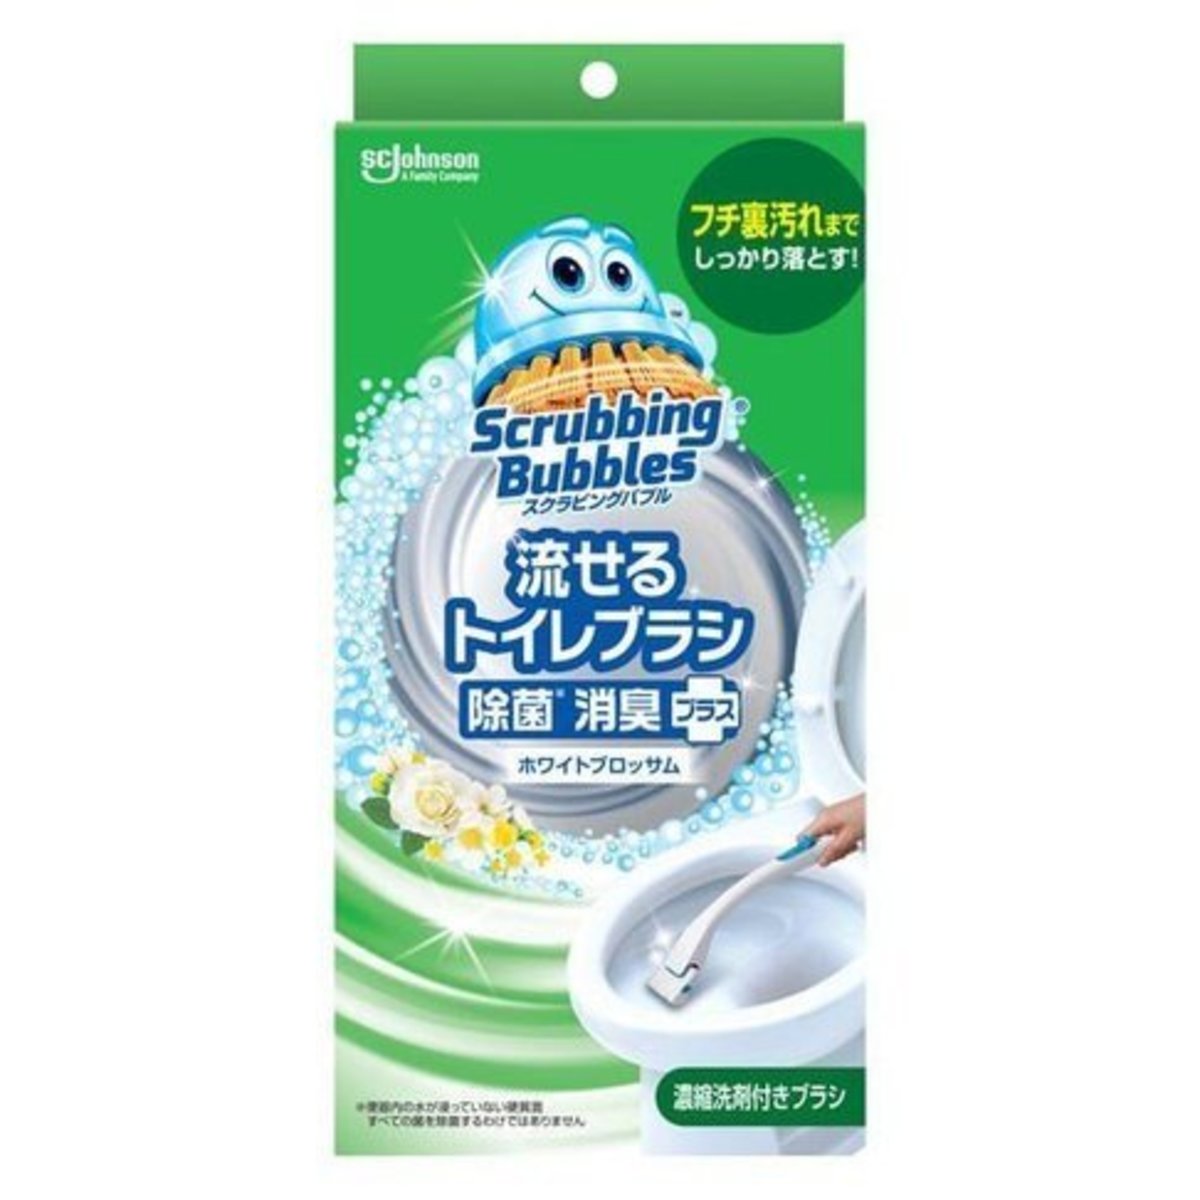 Scrubbing Bubbles Flushable Toilet Brush Set (Handle+Holder+ 4 Refill Brushes)